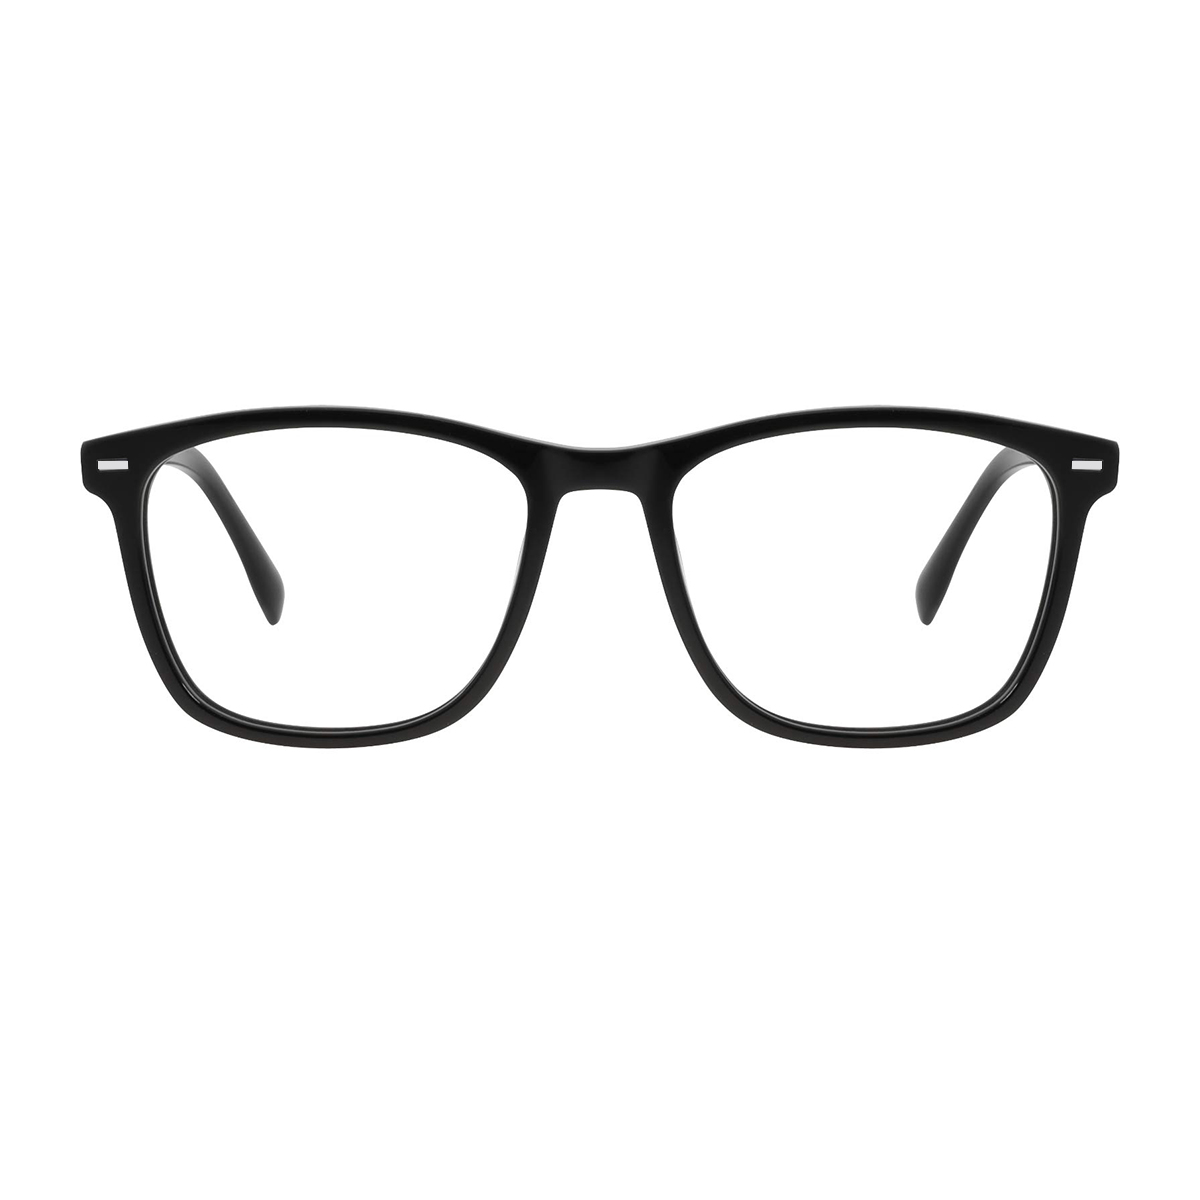 square reading-glasses #1211 - black